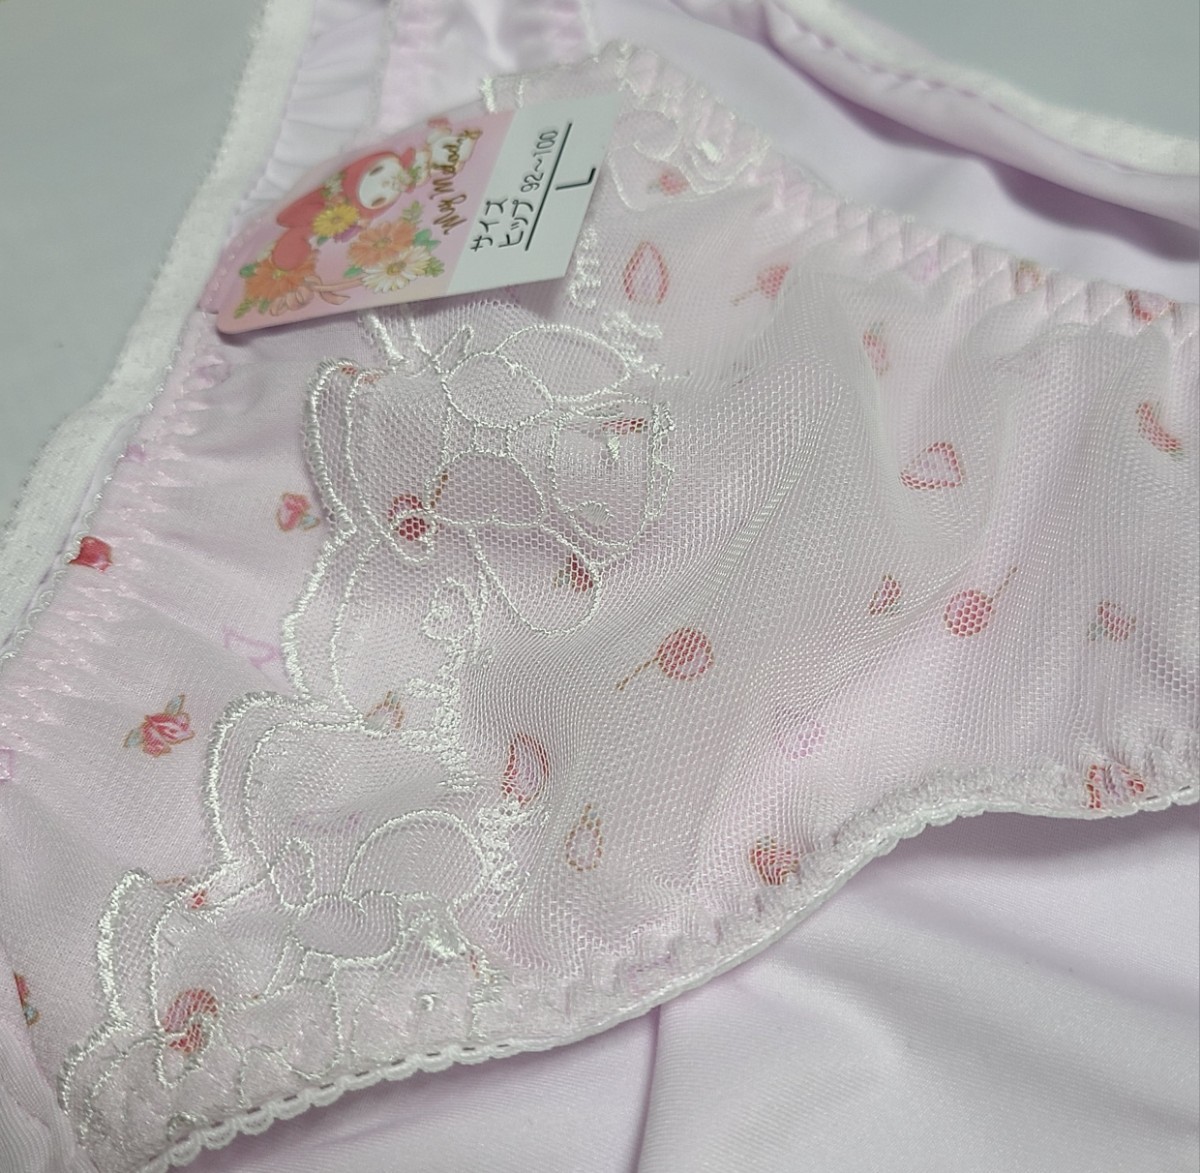  new goods My Melody L pink chiffon bla& shorts set bra pants race strawberry Cherry Sanrio girls teens 